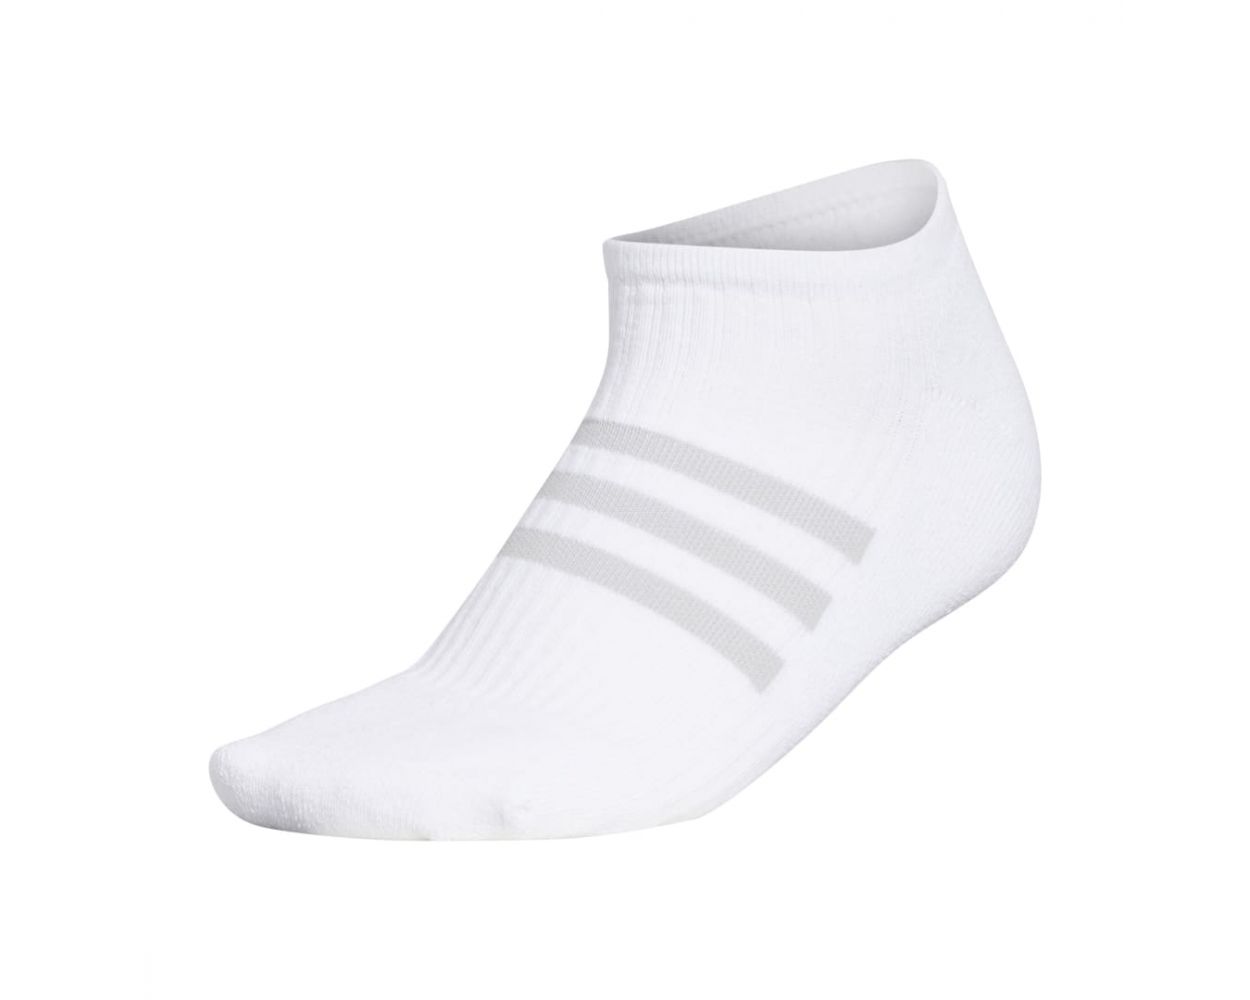 Adidas Women's Comfort Low Sock - Black/White